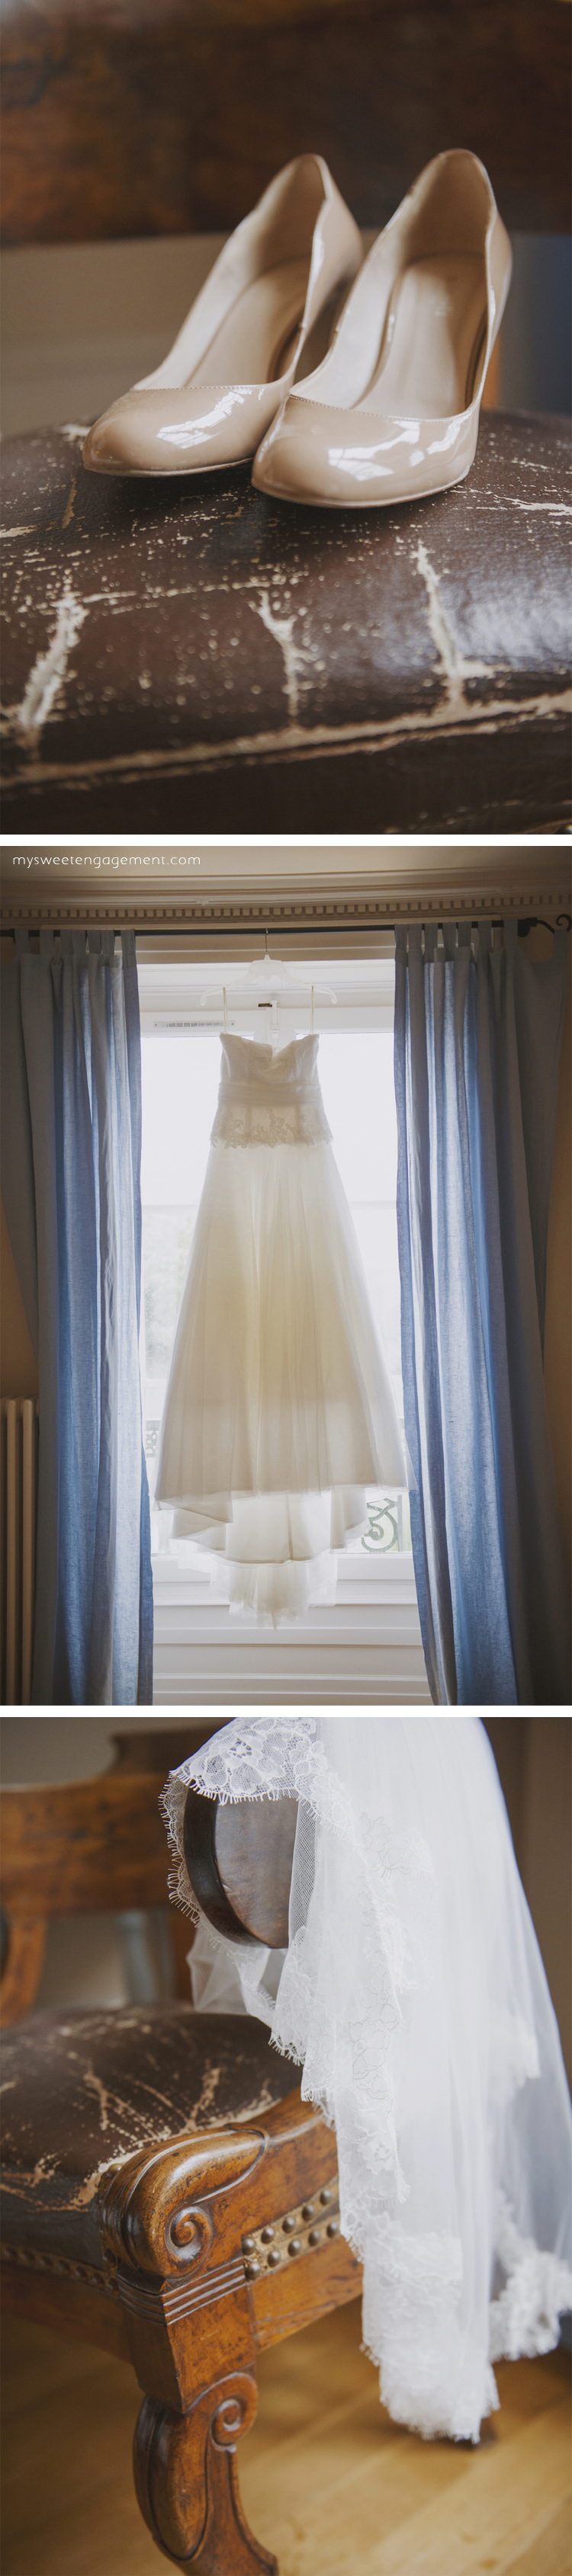 bride getting ready attire - bridal shoes - cymbelline wedding dress gown - lace veil - wedding blog - my sweet engagement